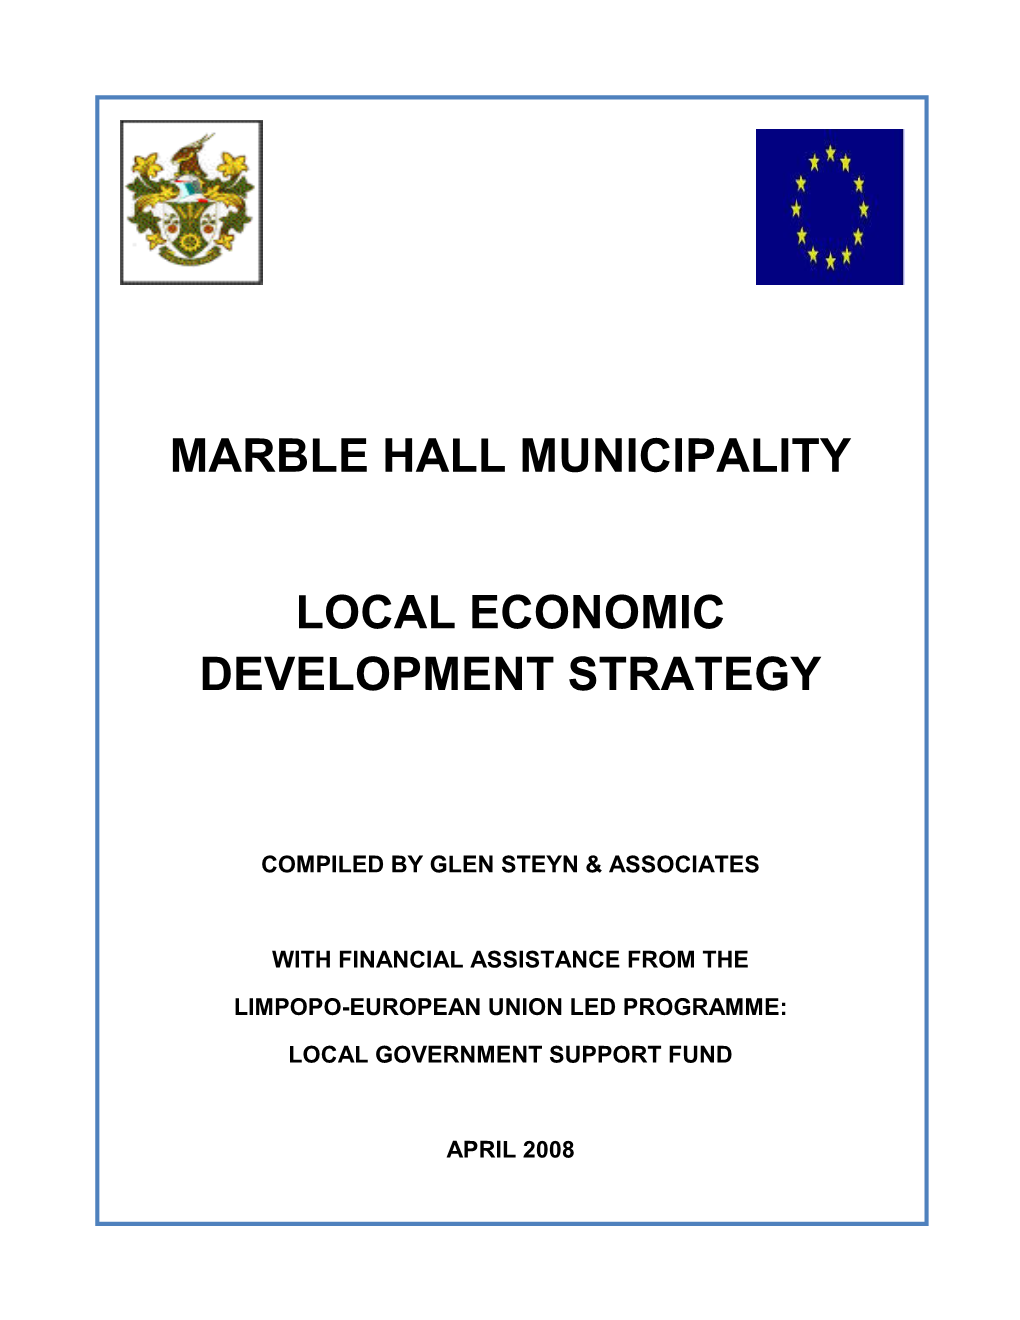 Marble Hall Municipality Local Economic